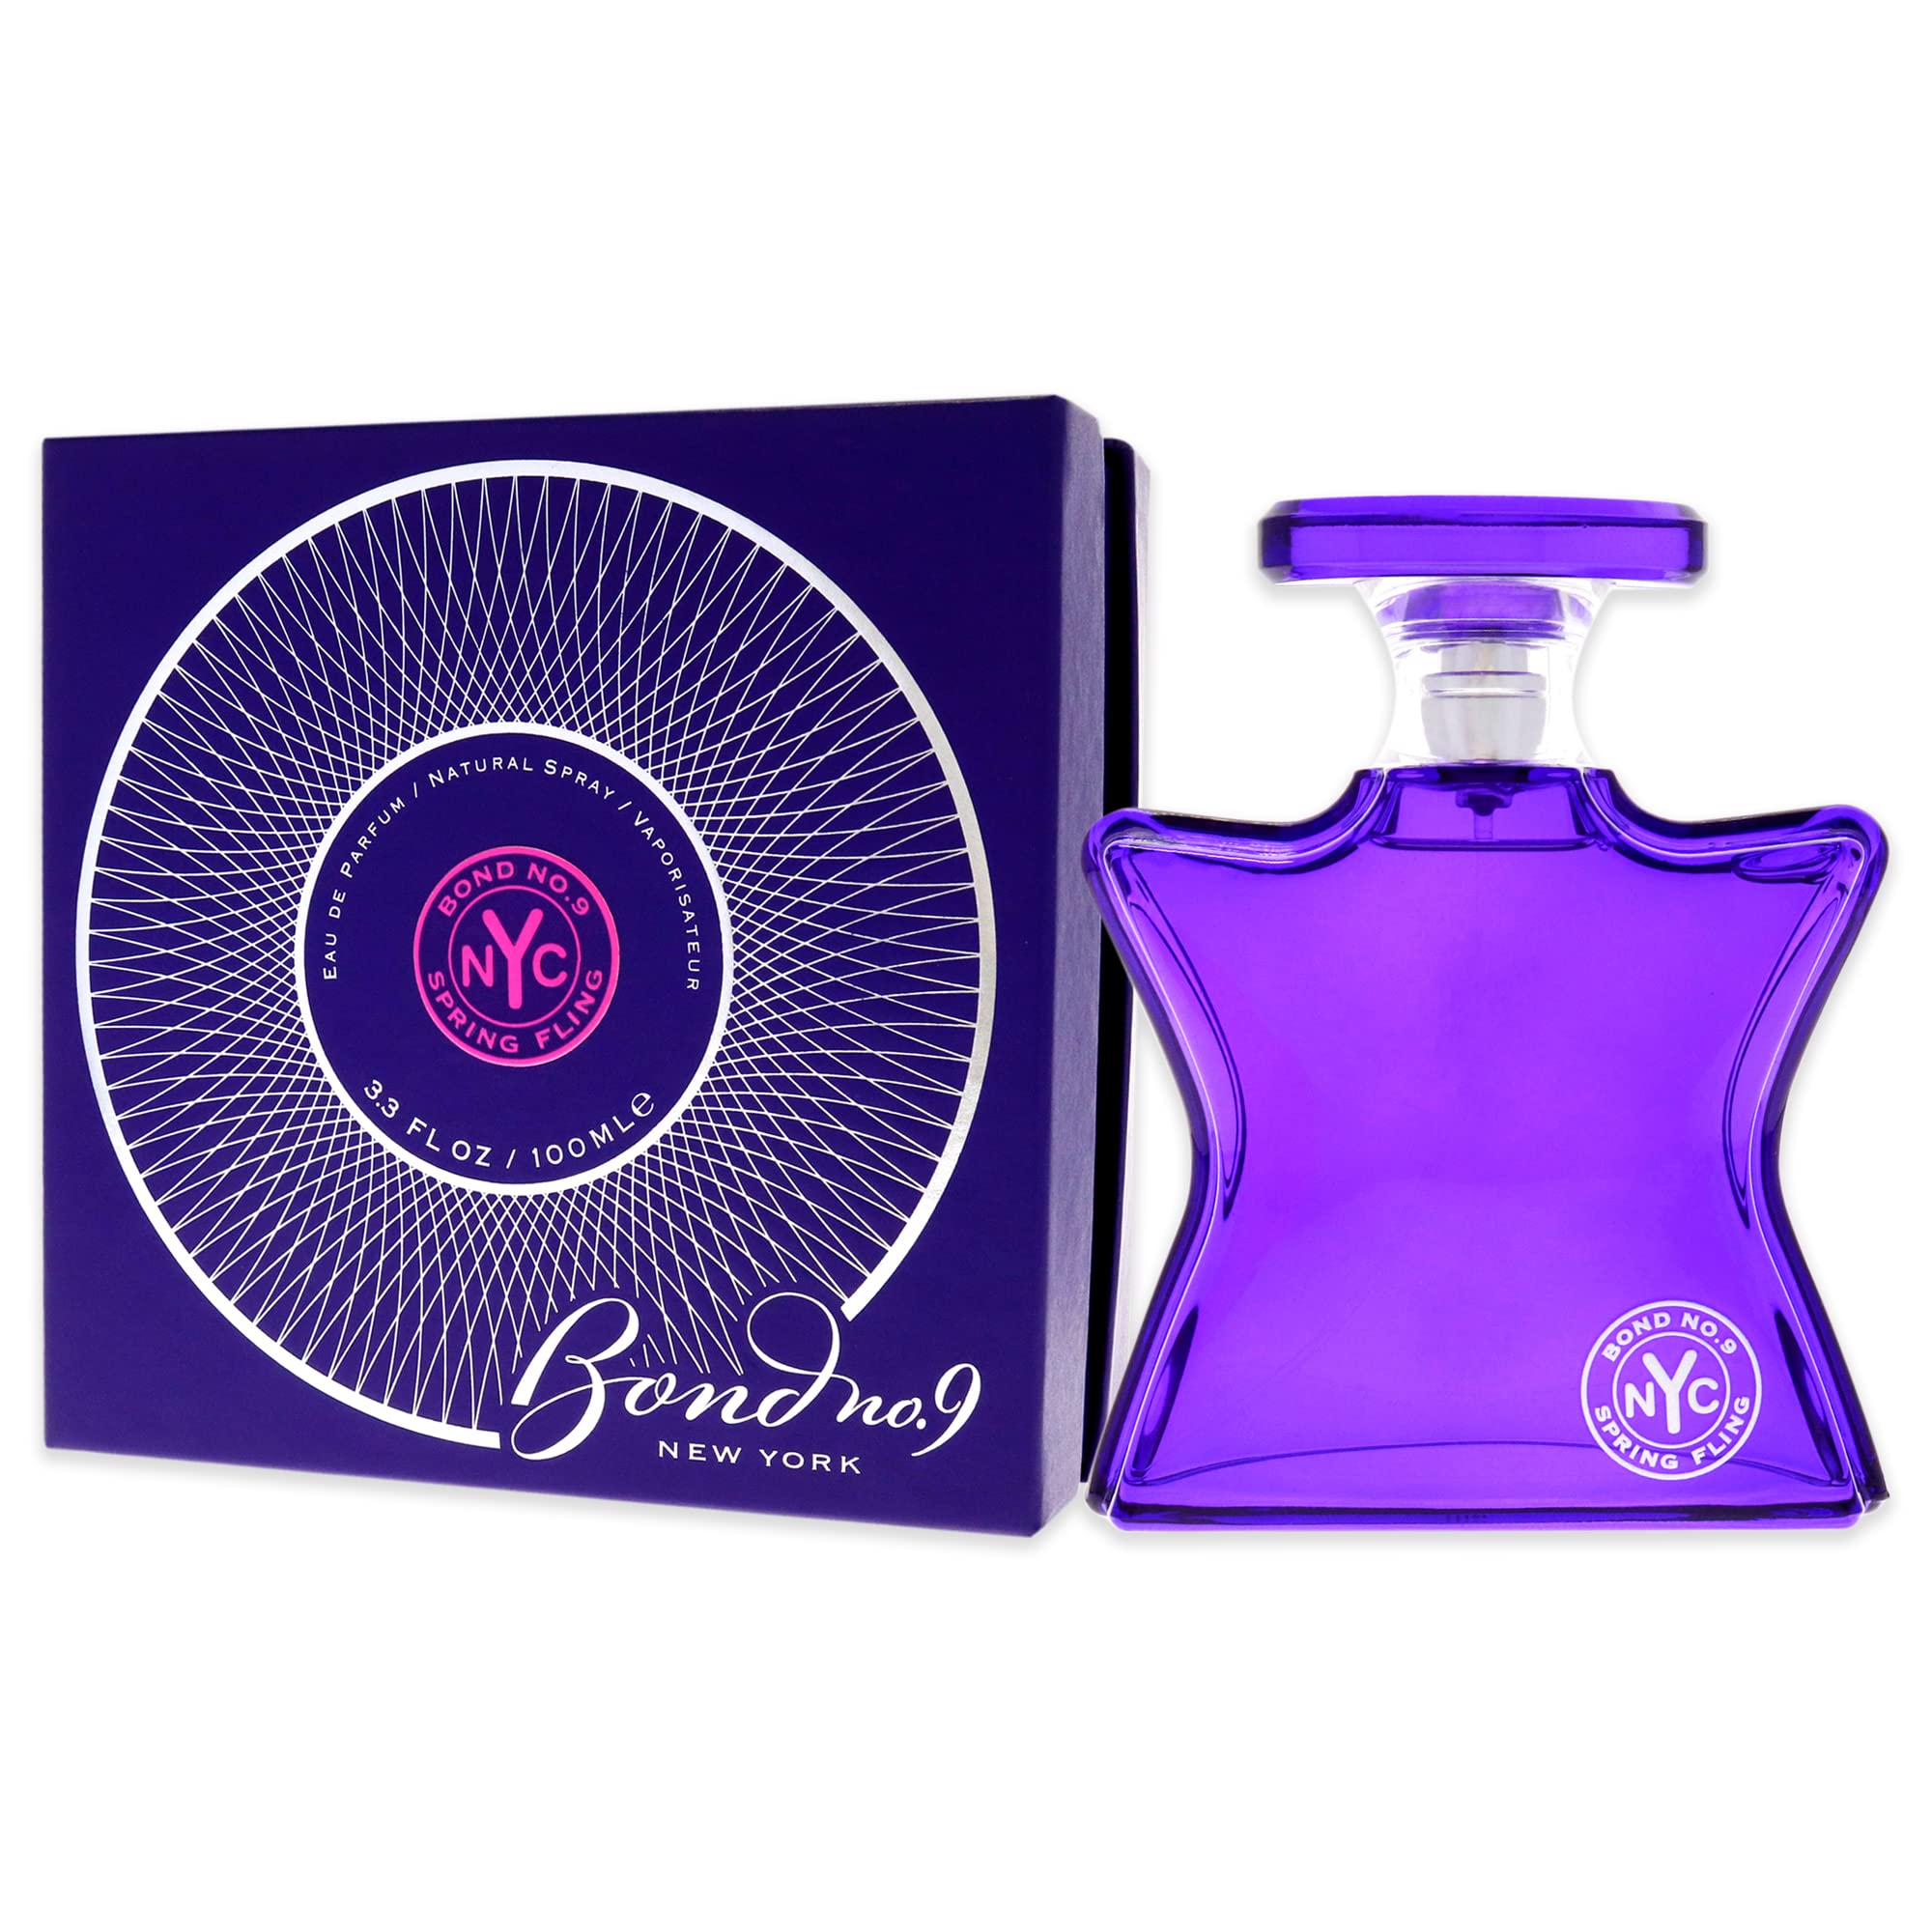 Bond No. 9 New York Spring fling eau de parfum for women 3.4 oz / 100 ml, 3.4 Fluid Ounce